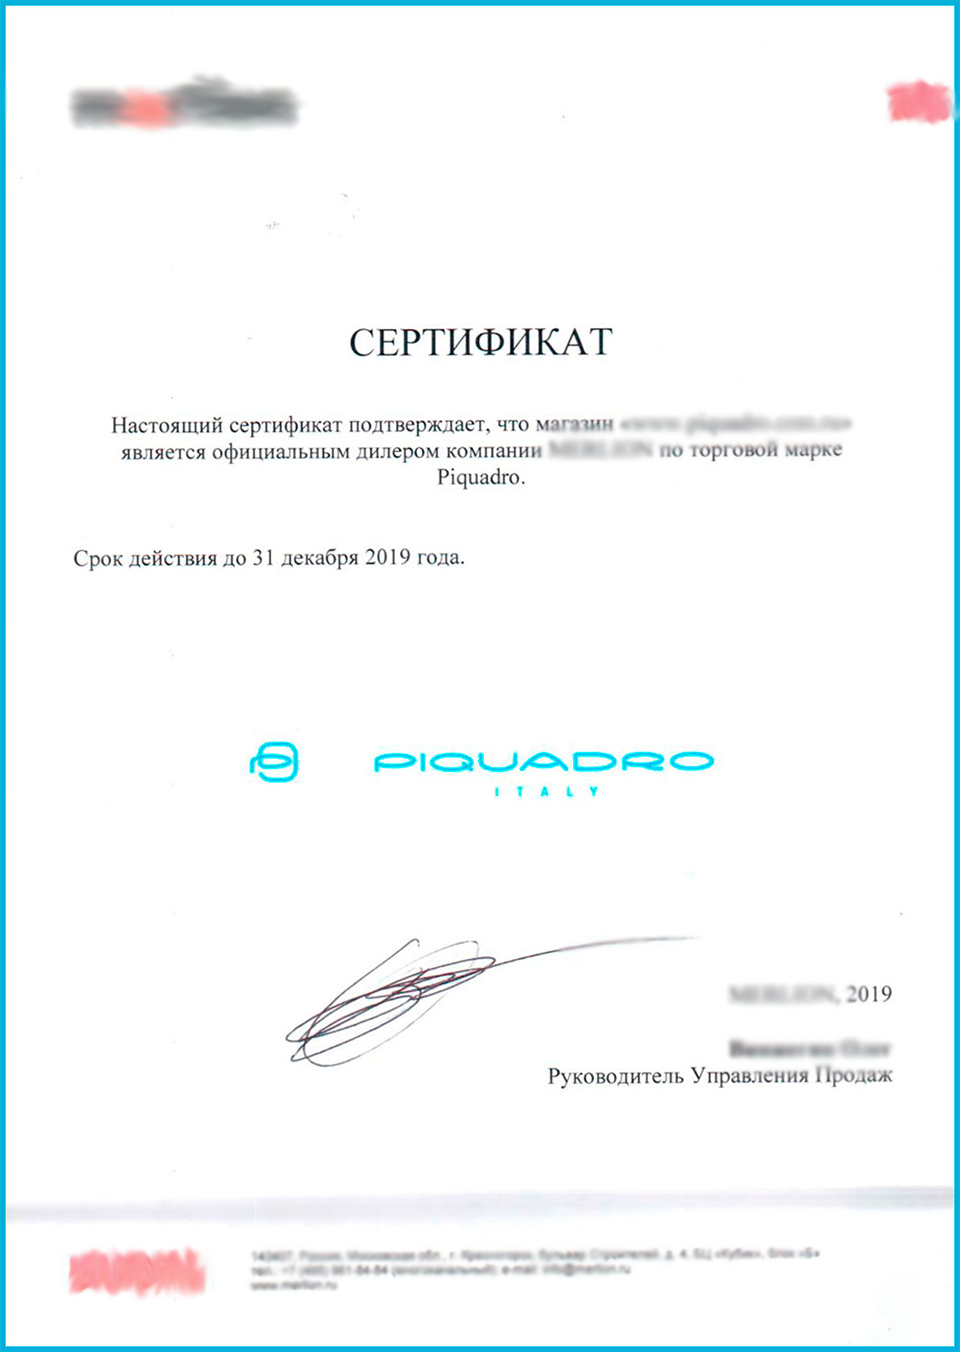 Сертификат от дистрибьютера Piquadro